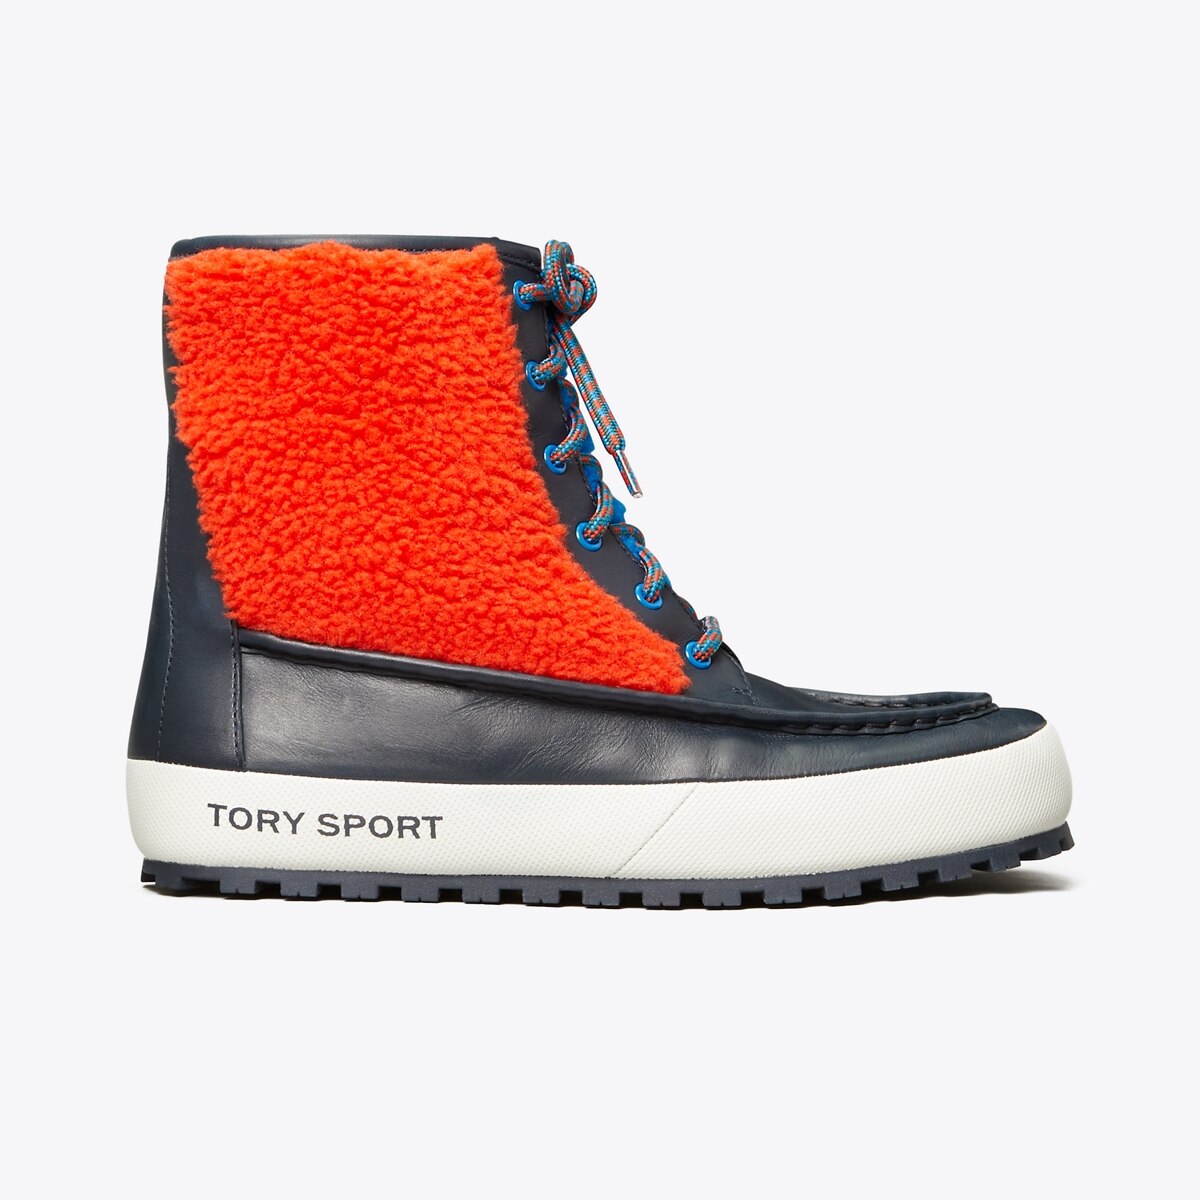 tory sport boots